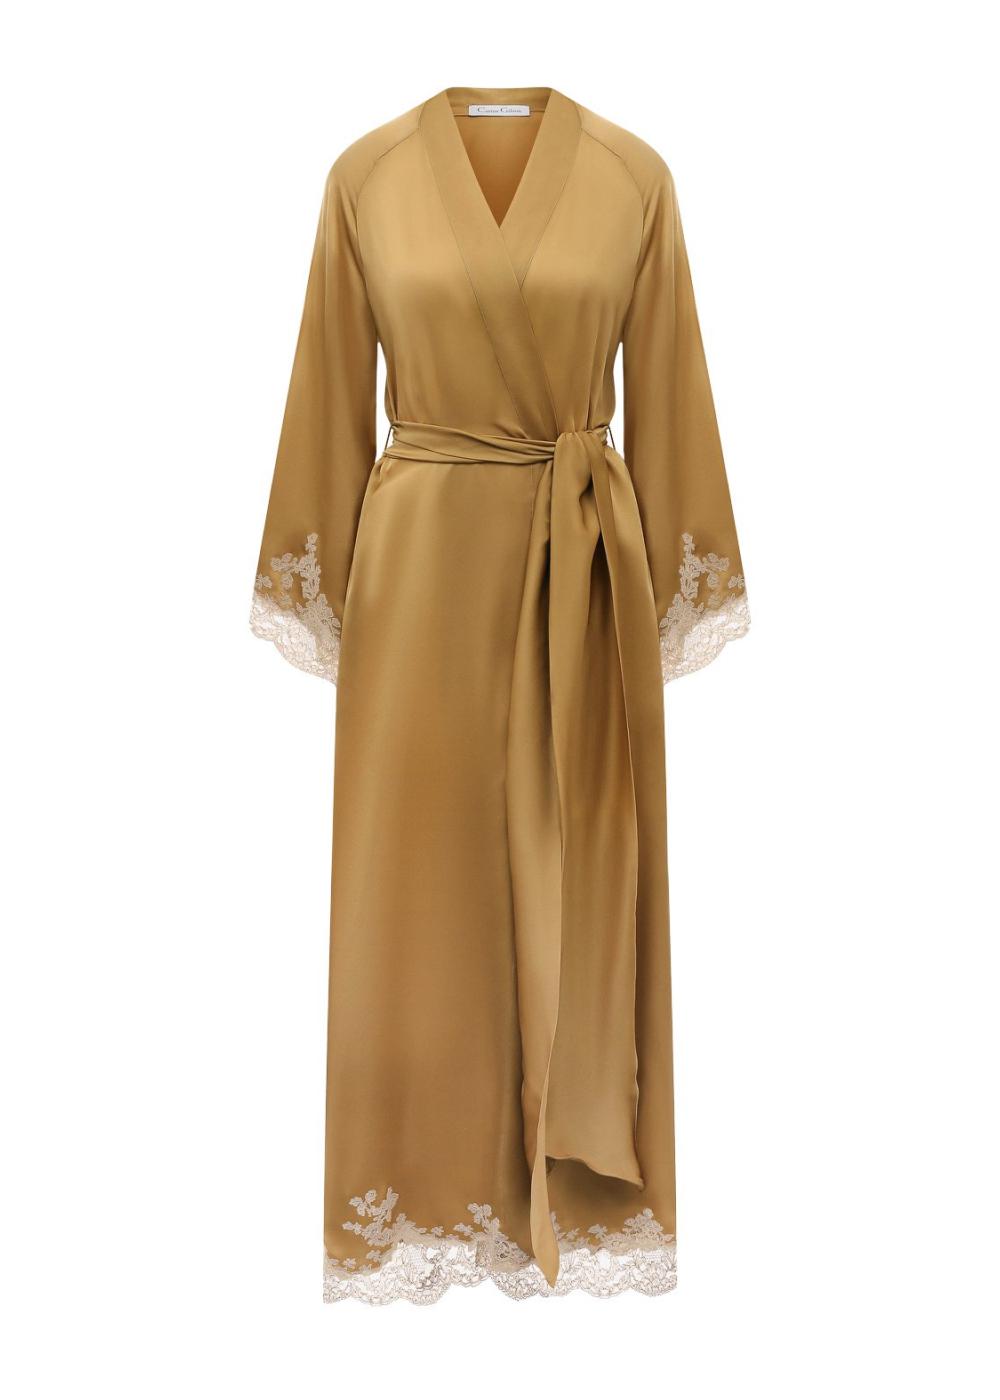 Silk robe, Carine Gilson, RUB 388,000.  (tsum.ru)